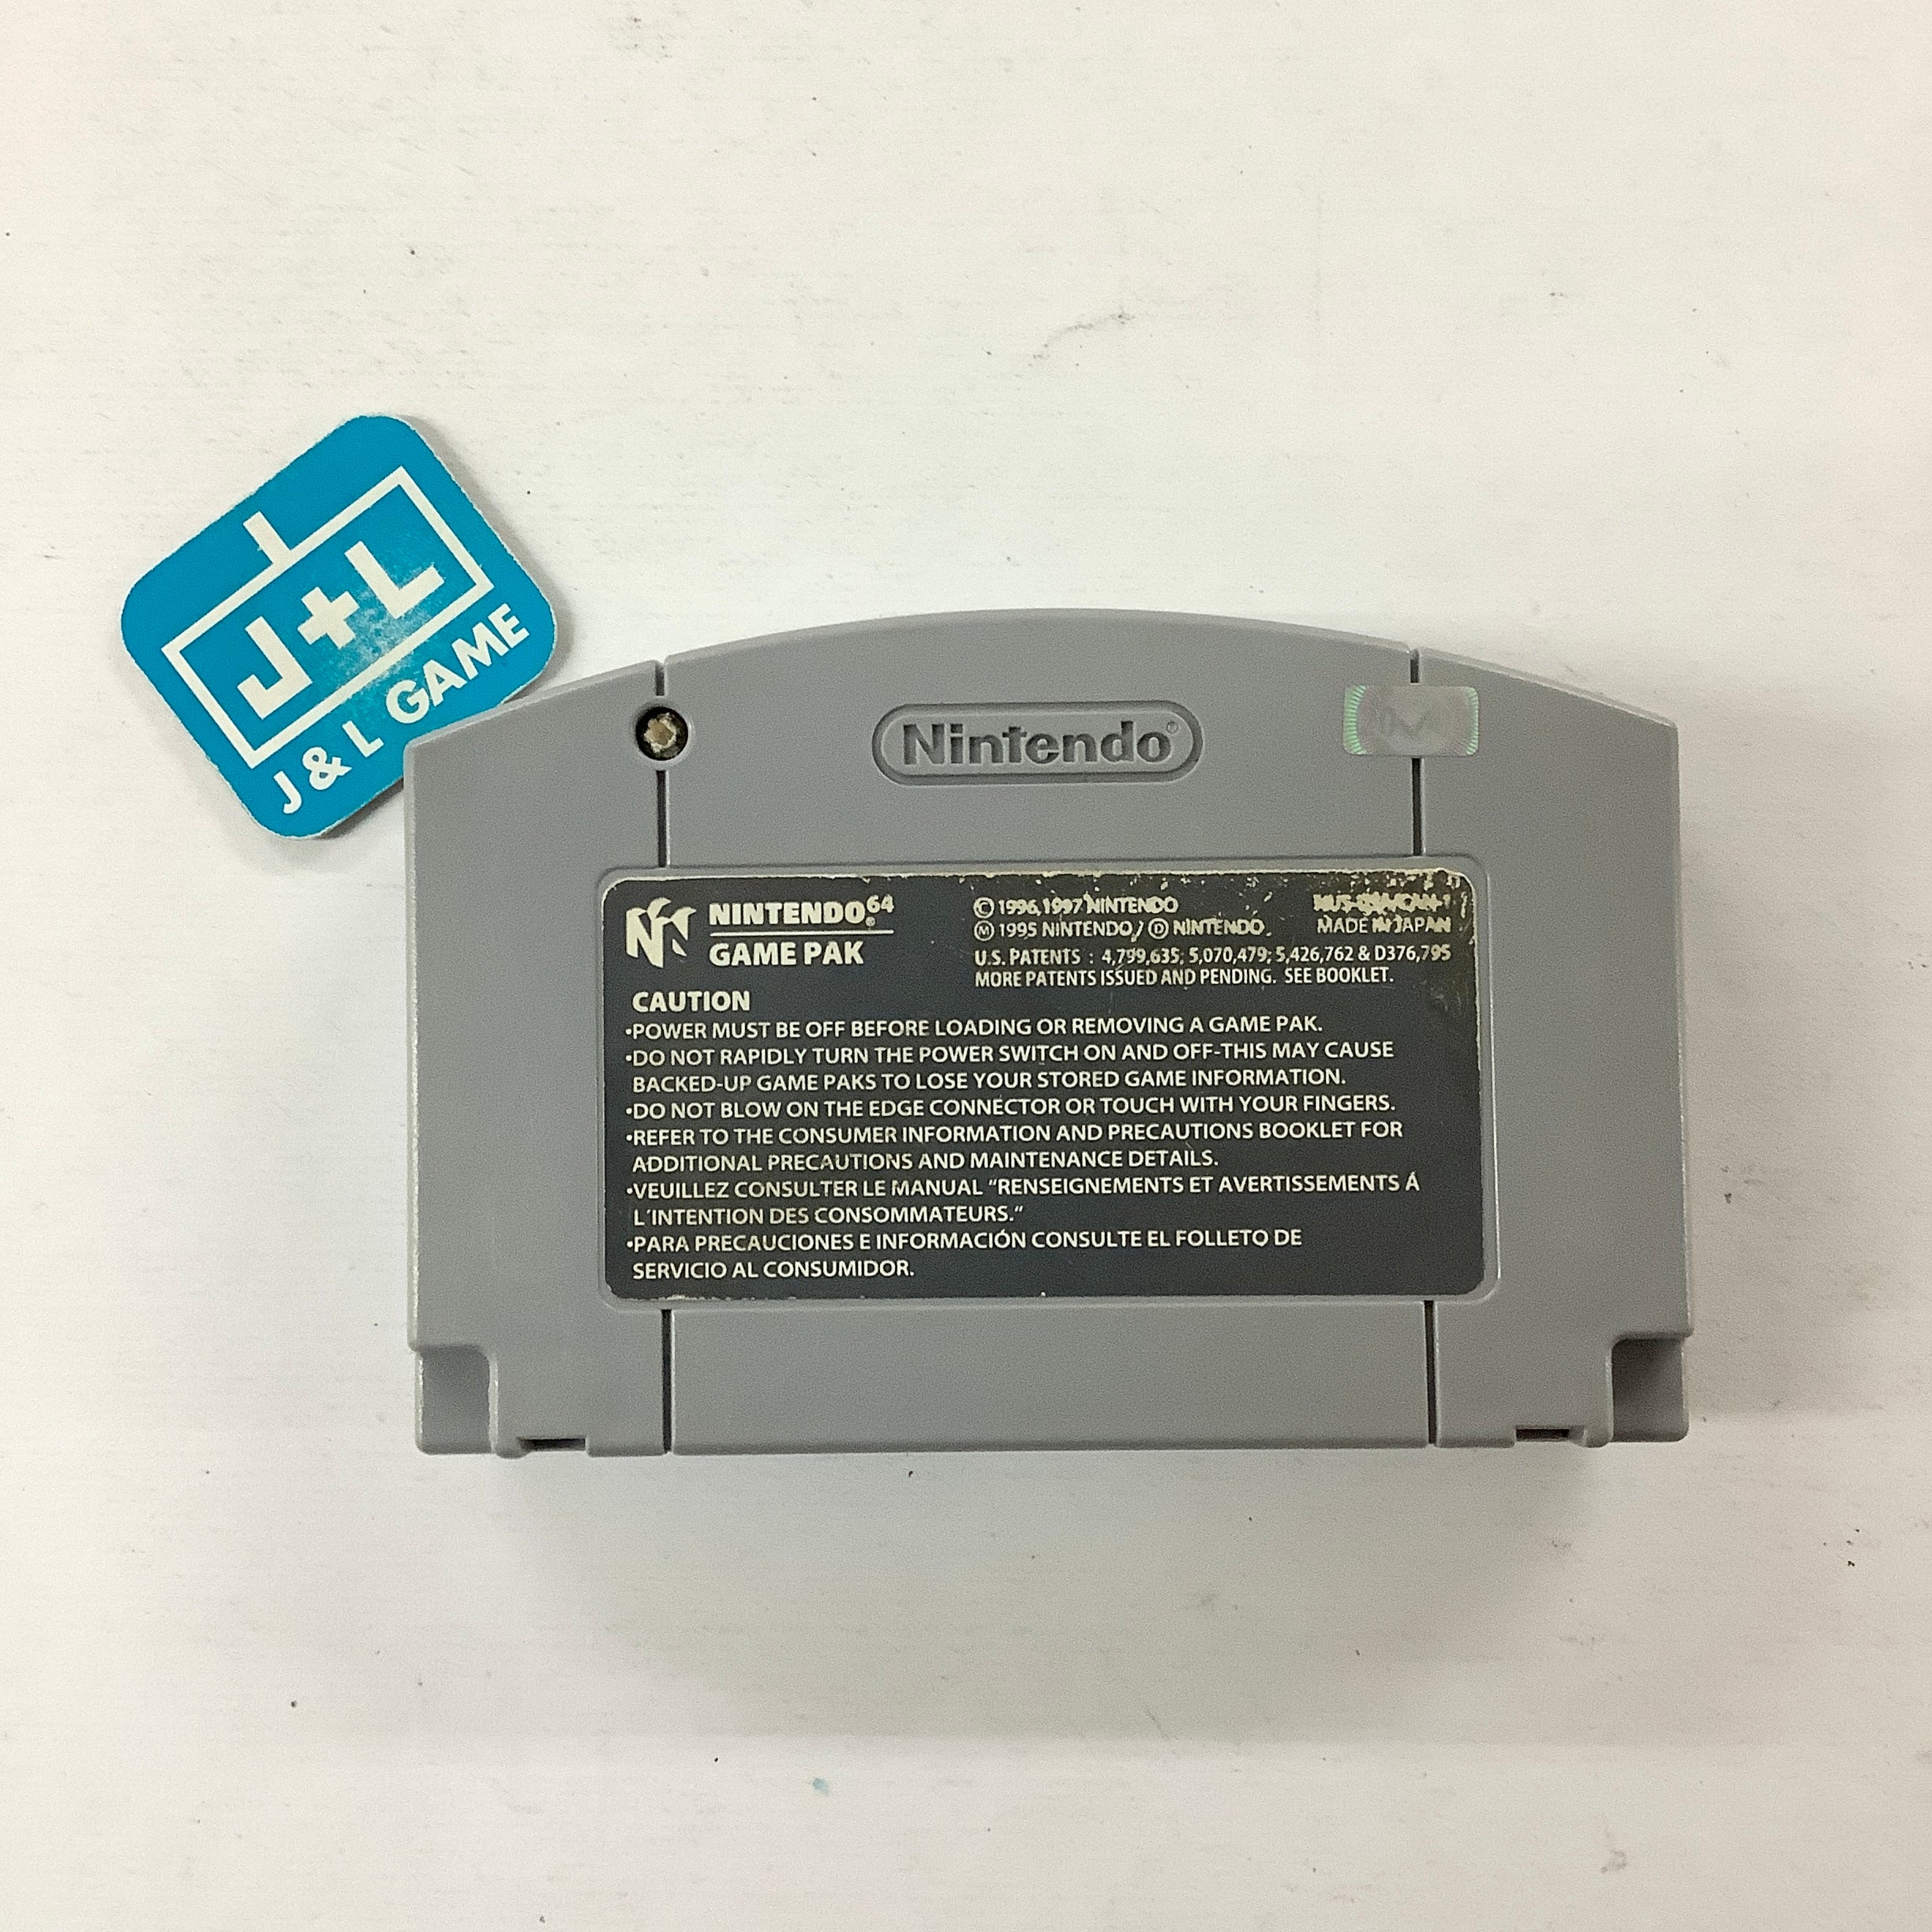 Mia Hamm Soccer 64 - (N64) Nintendo 64 [Pre-Owned] Video Games SouthPeak Games   